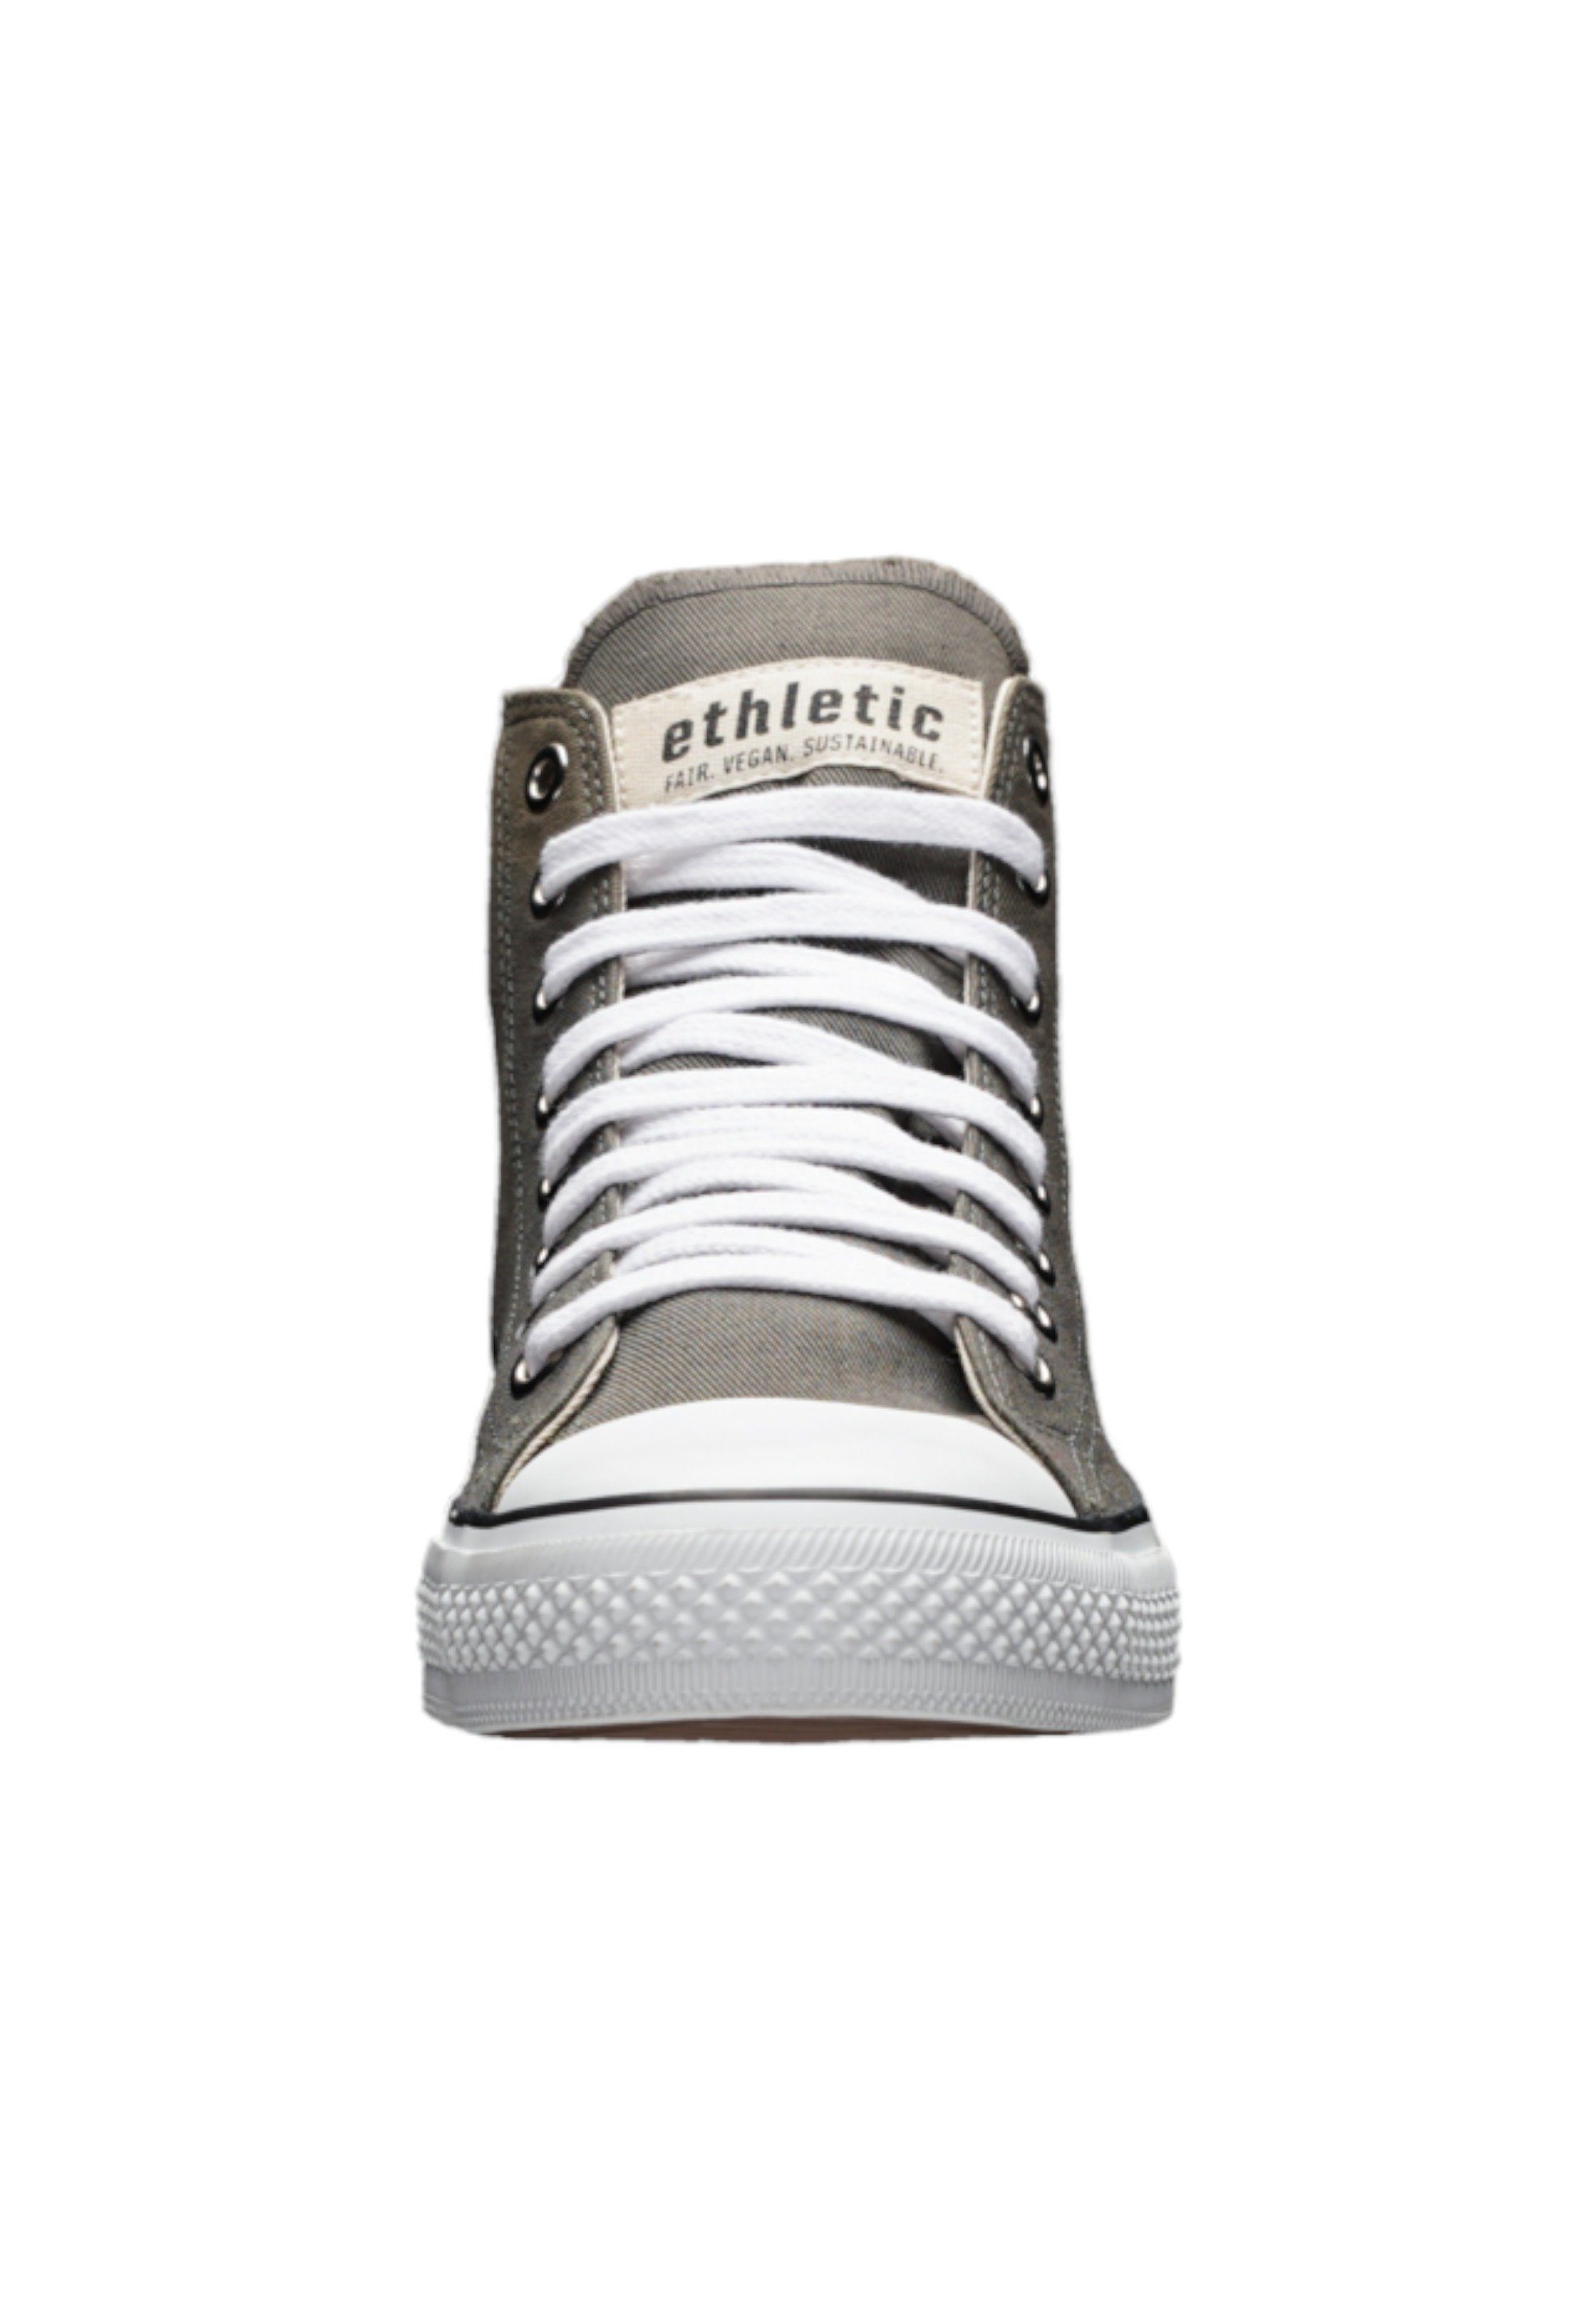 Donkey Cut Produkt Just White ETHLETIC White Hi Grey Sneaker Fairtrade Cap -